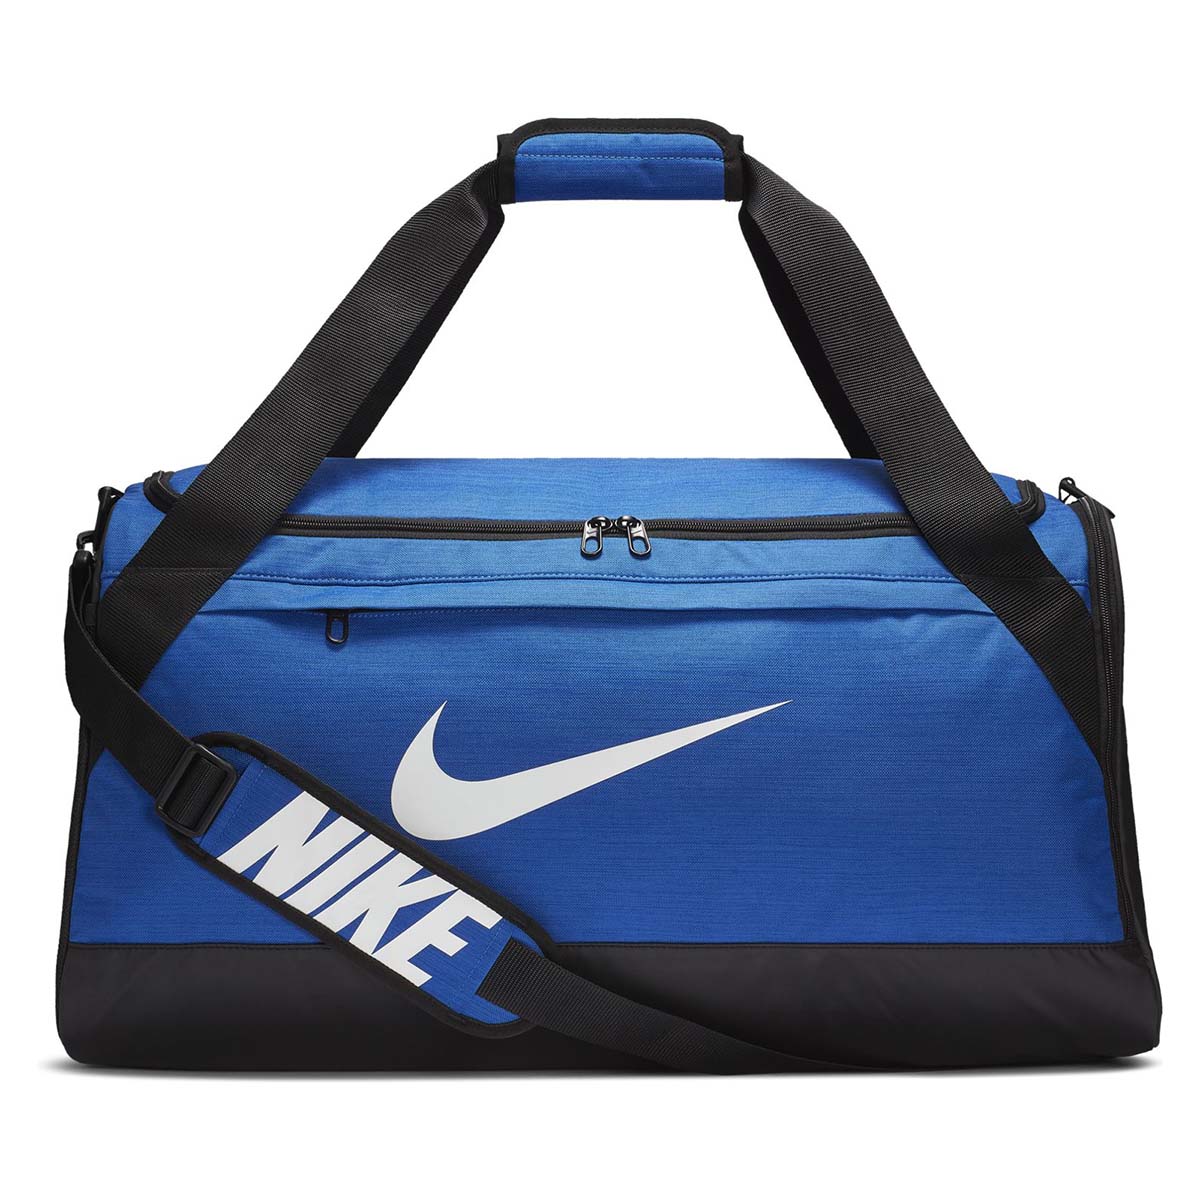 Nike Brasilia Medium Duffle Bag